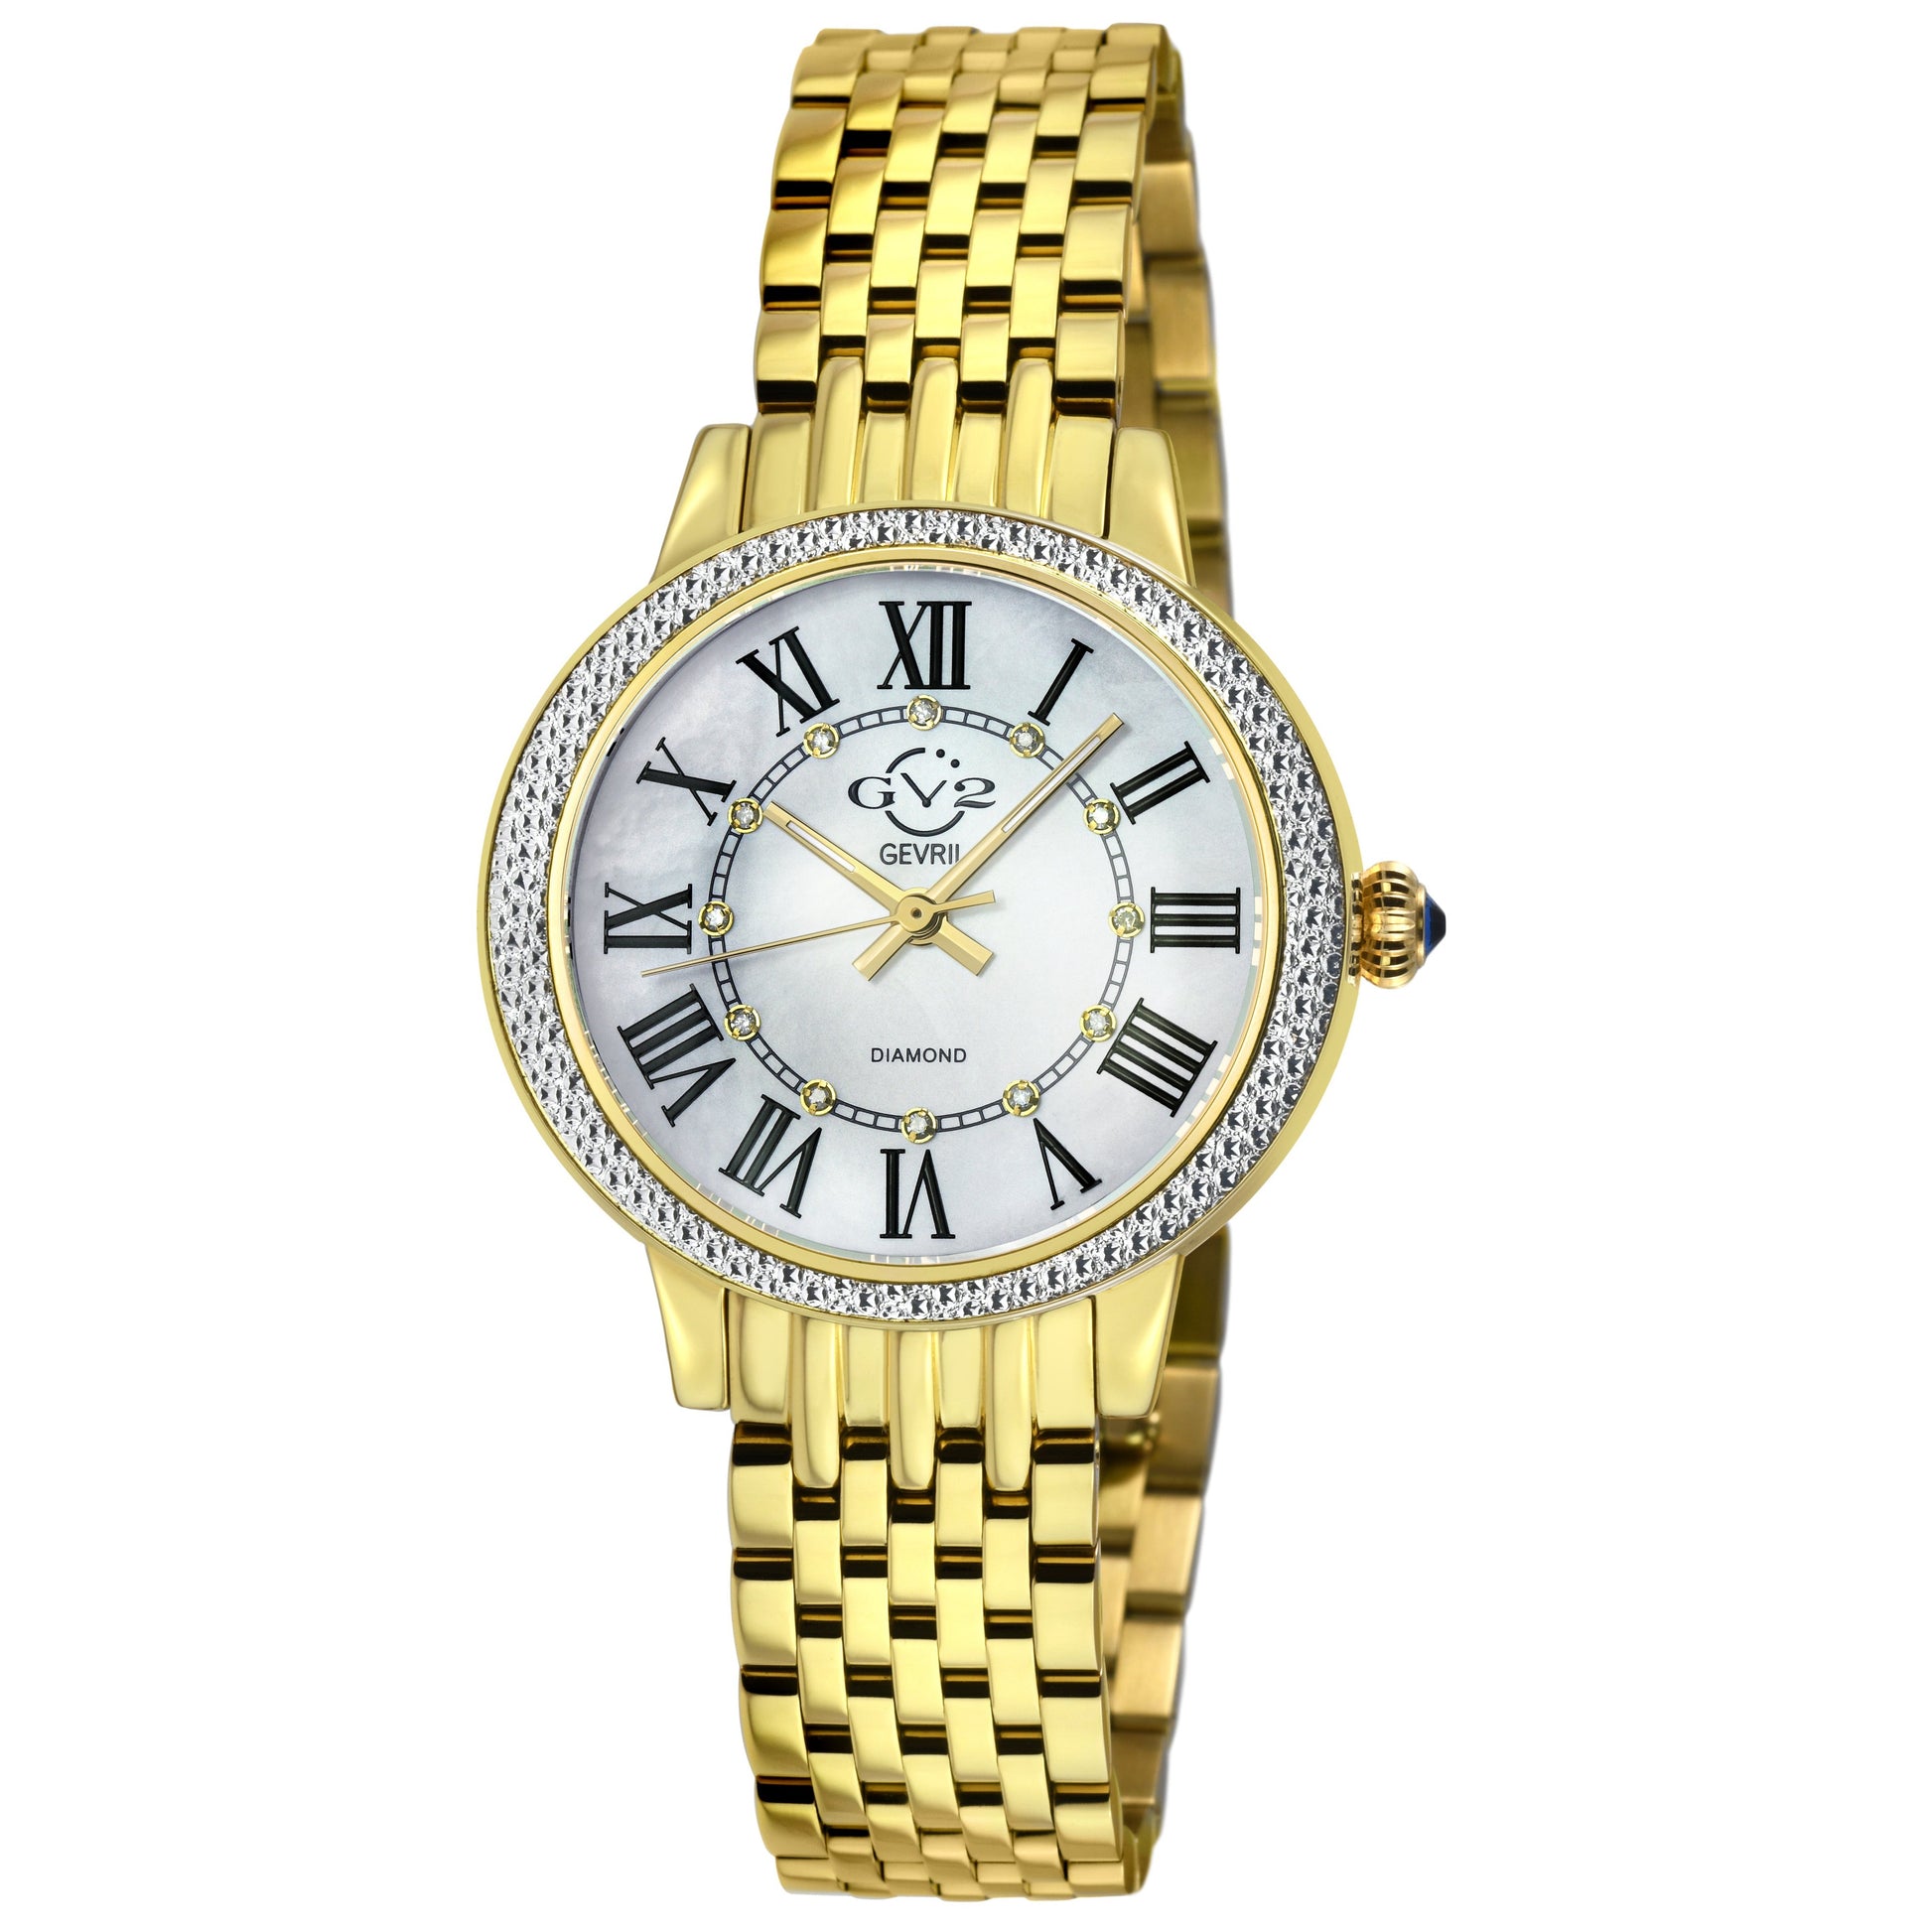 Gevril-Luxury-Swiss-Watches-GV2 Astor III Diamond-9152B